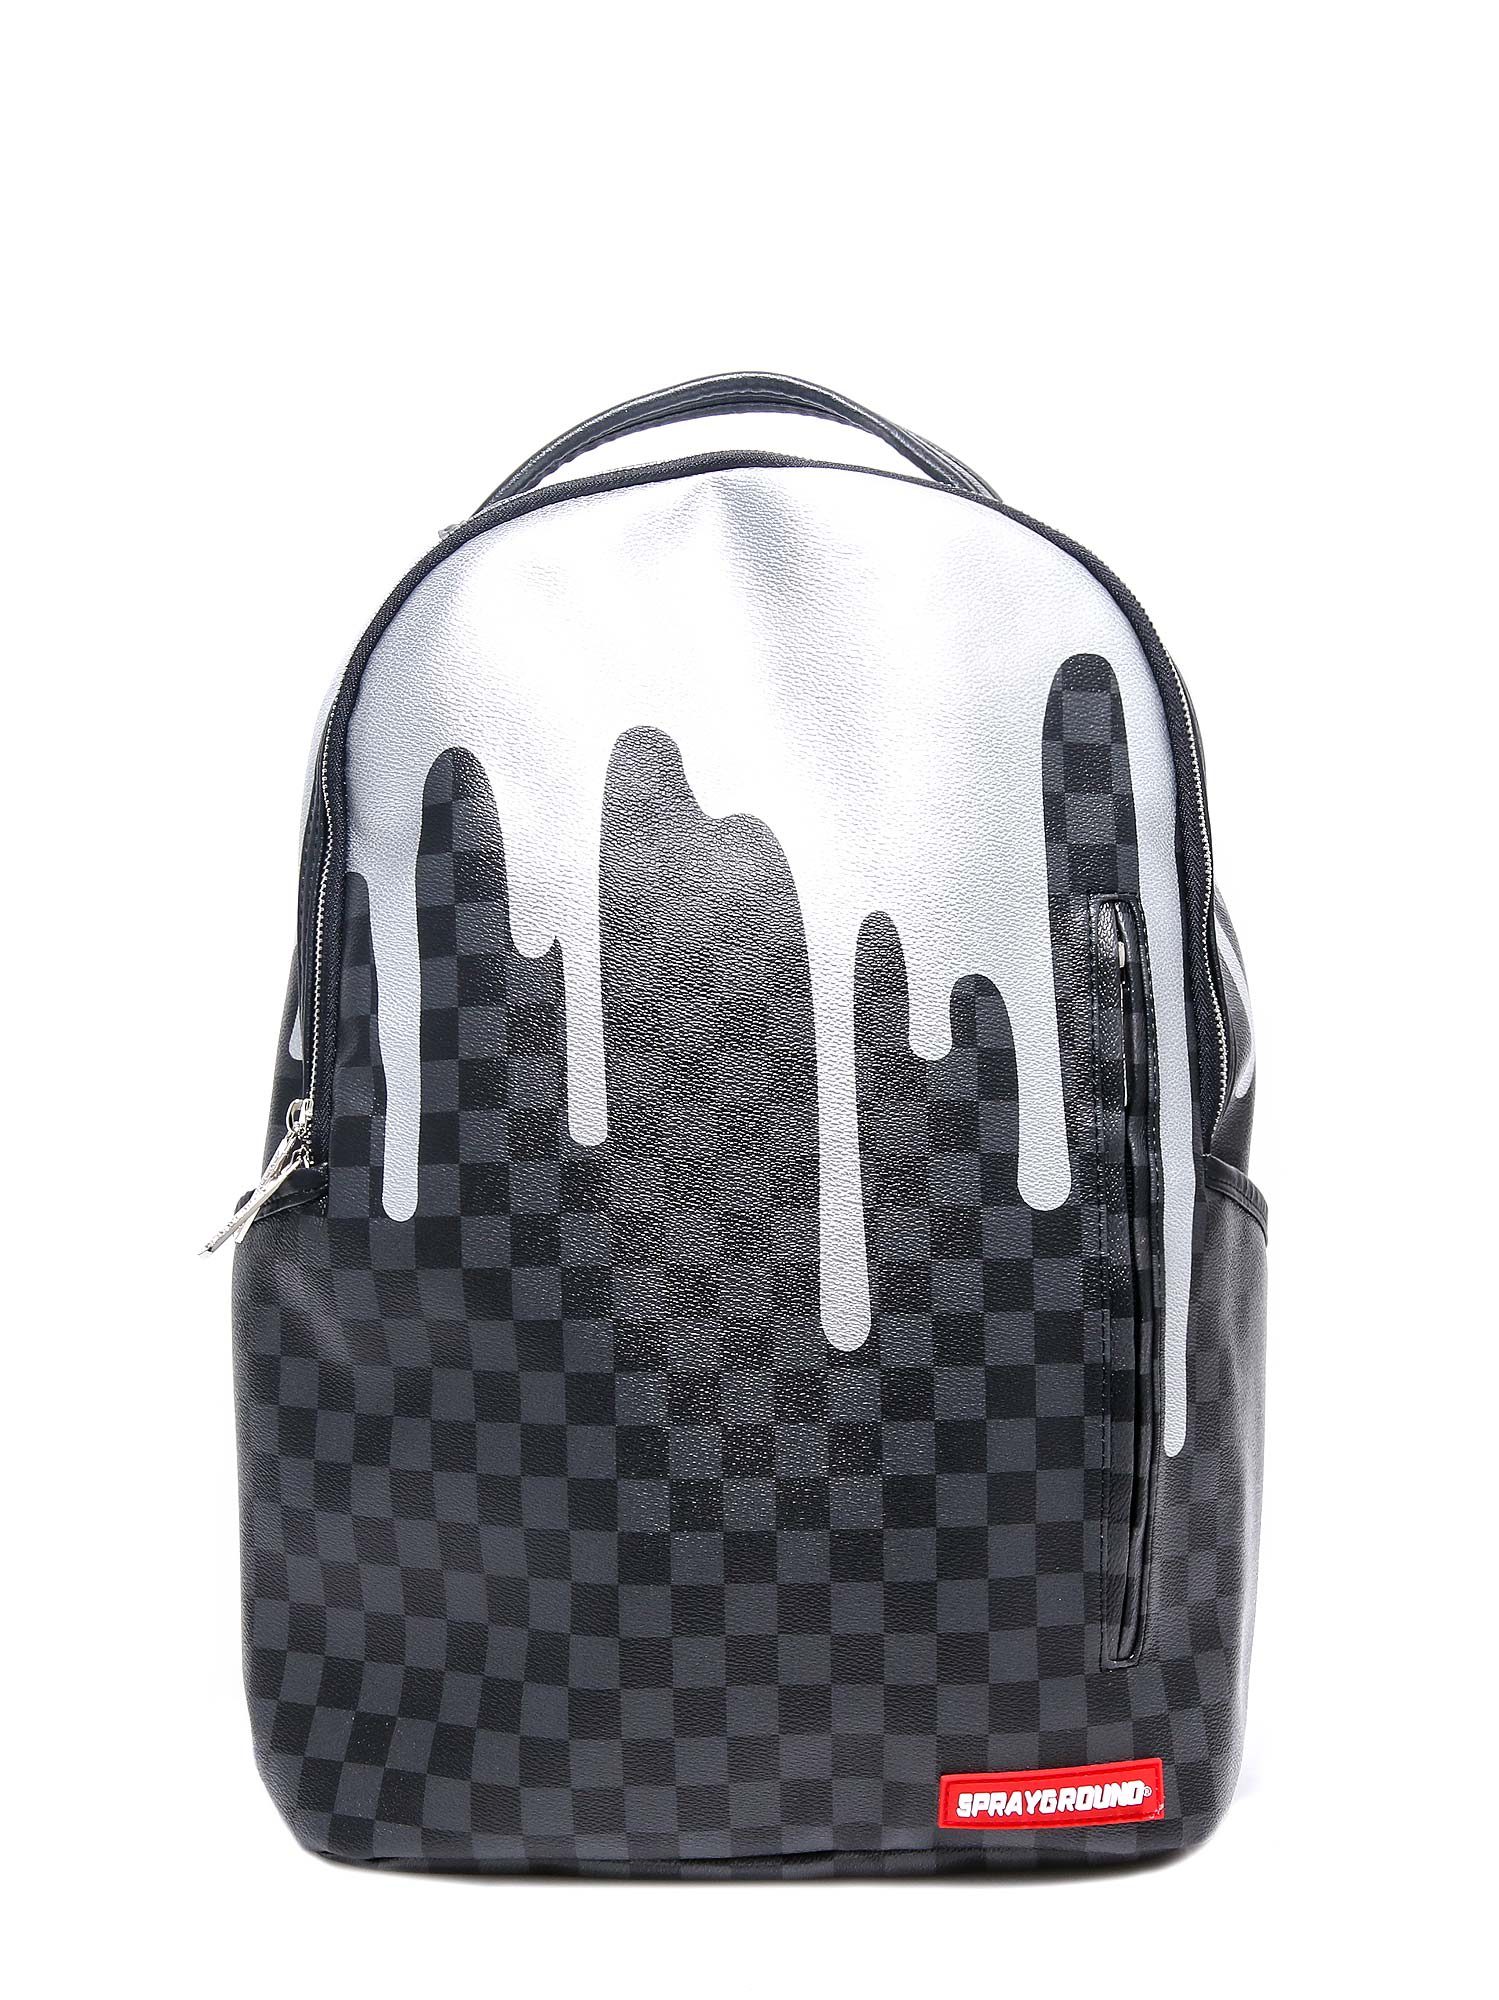 Sprayground Platinum Drip Black Checkered Duffle Bag